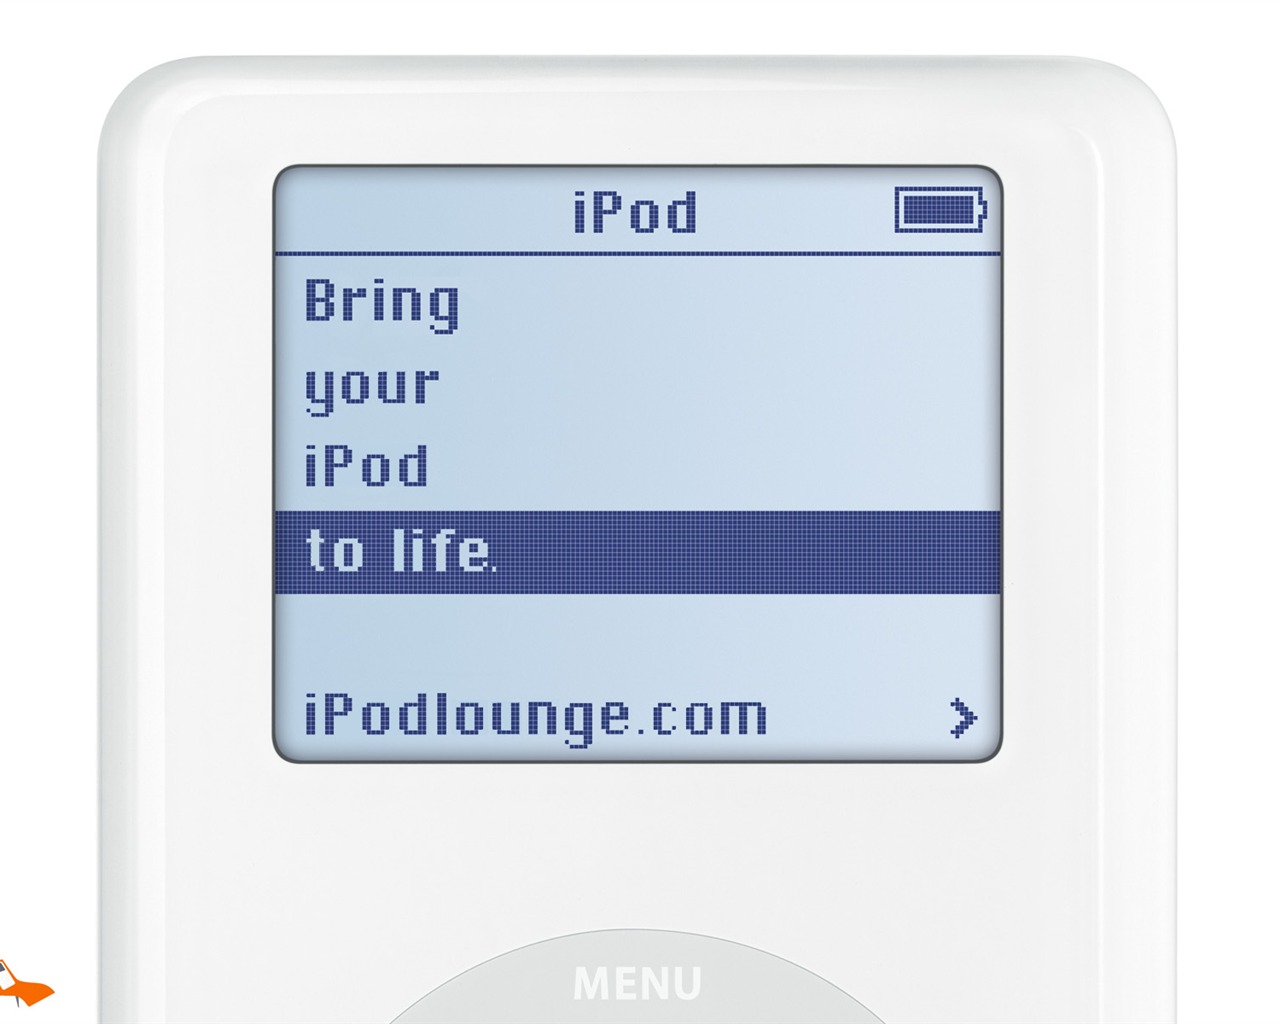 iPod 壁纸(一)8 - 1280x1024